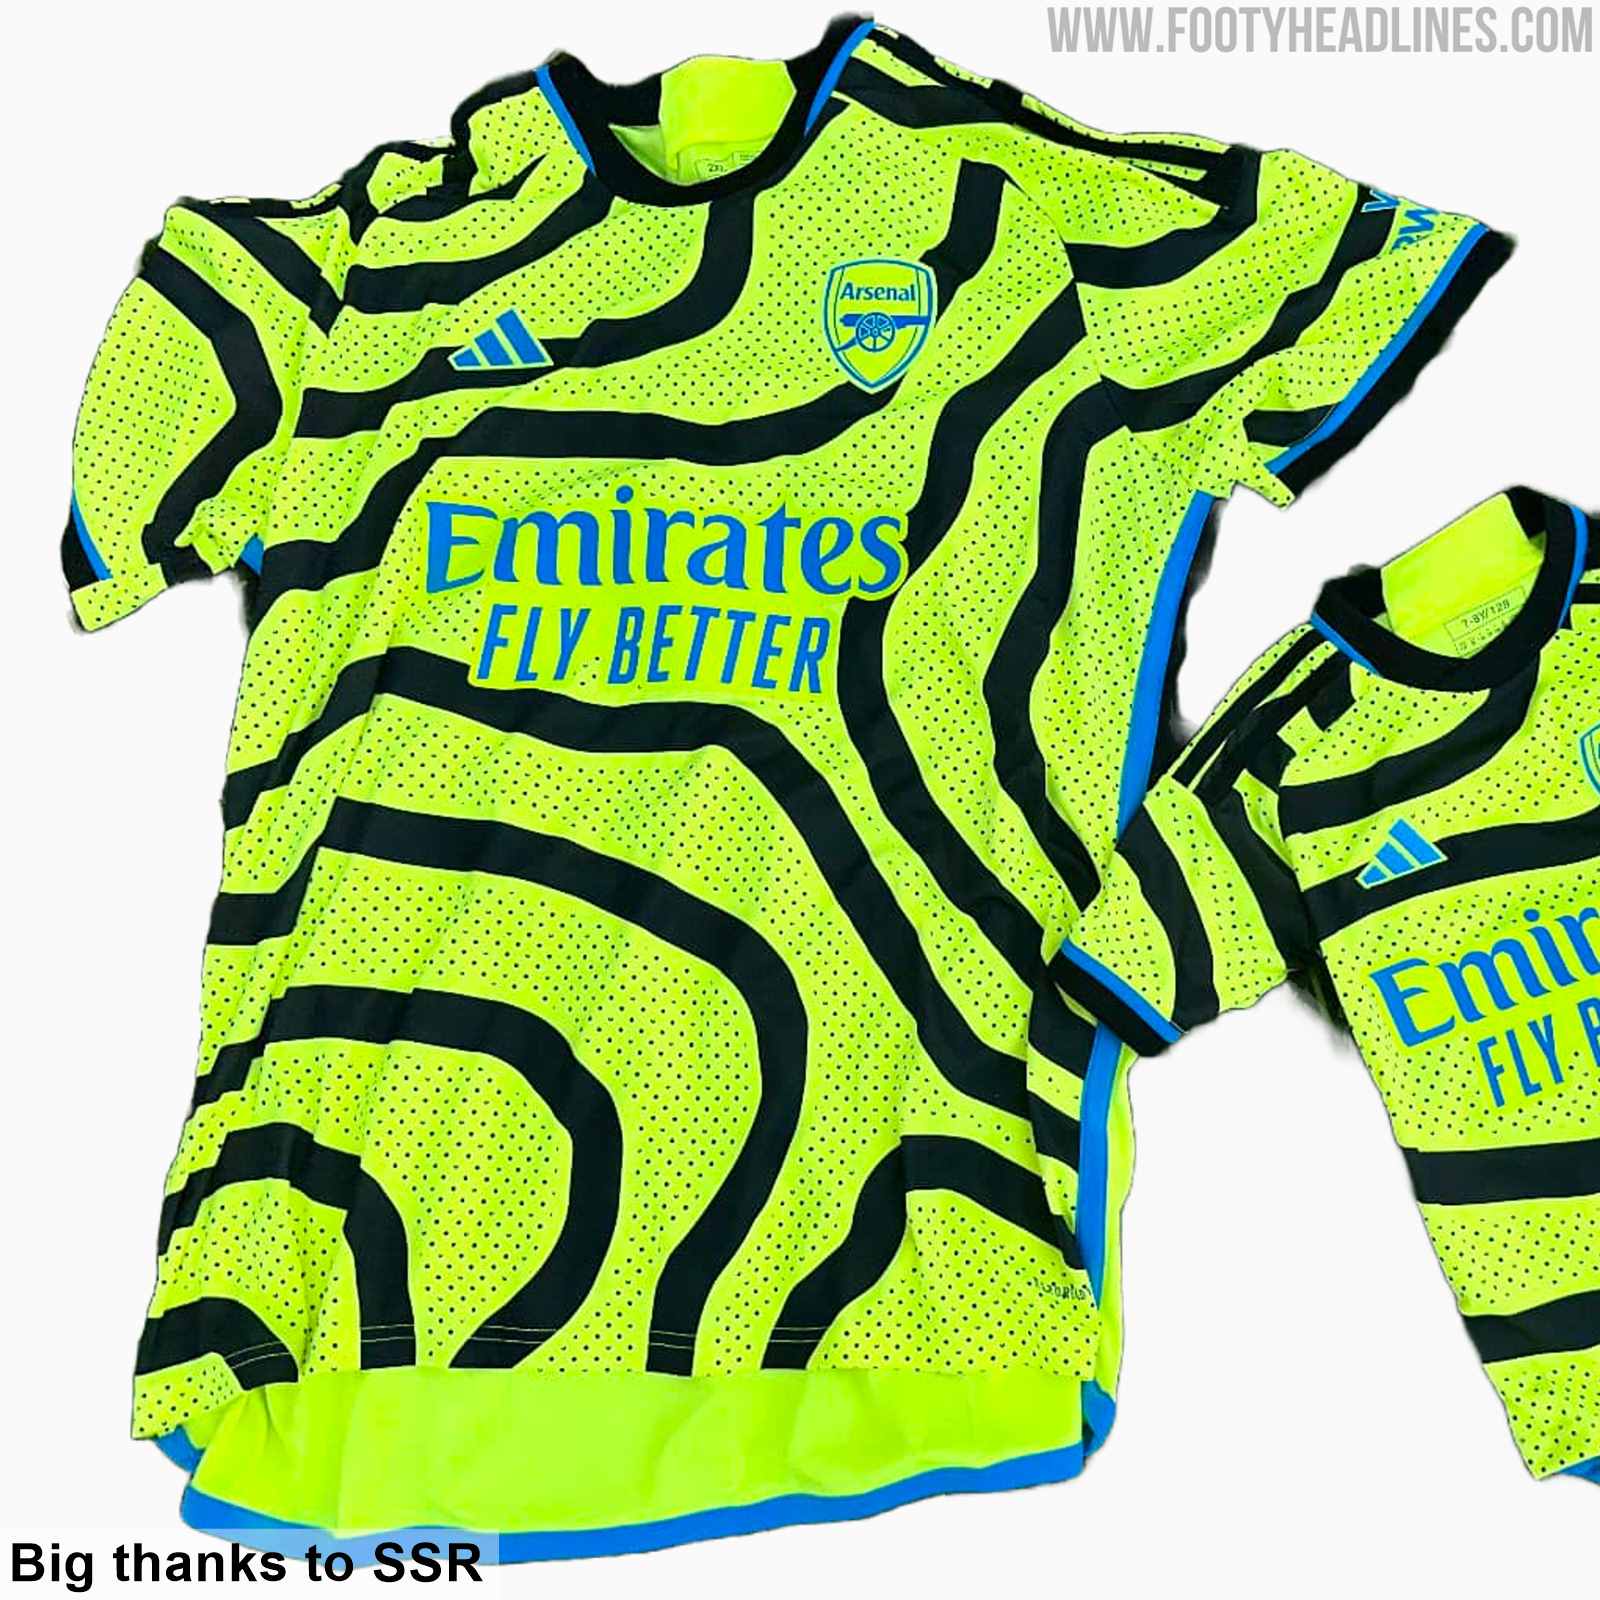 Black adidas Arsenal FC 2023/24 Away Shirt